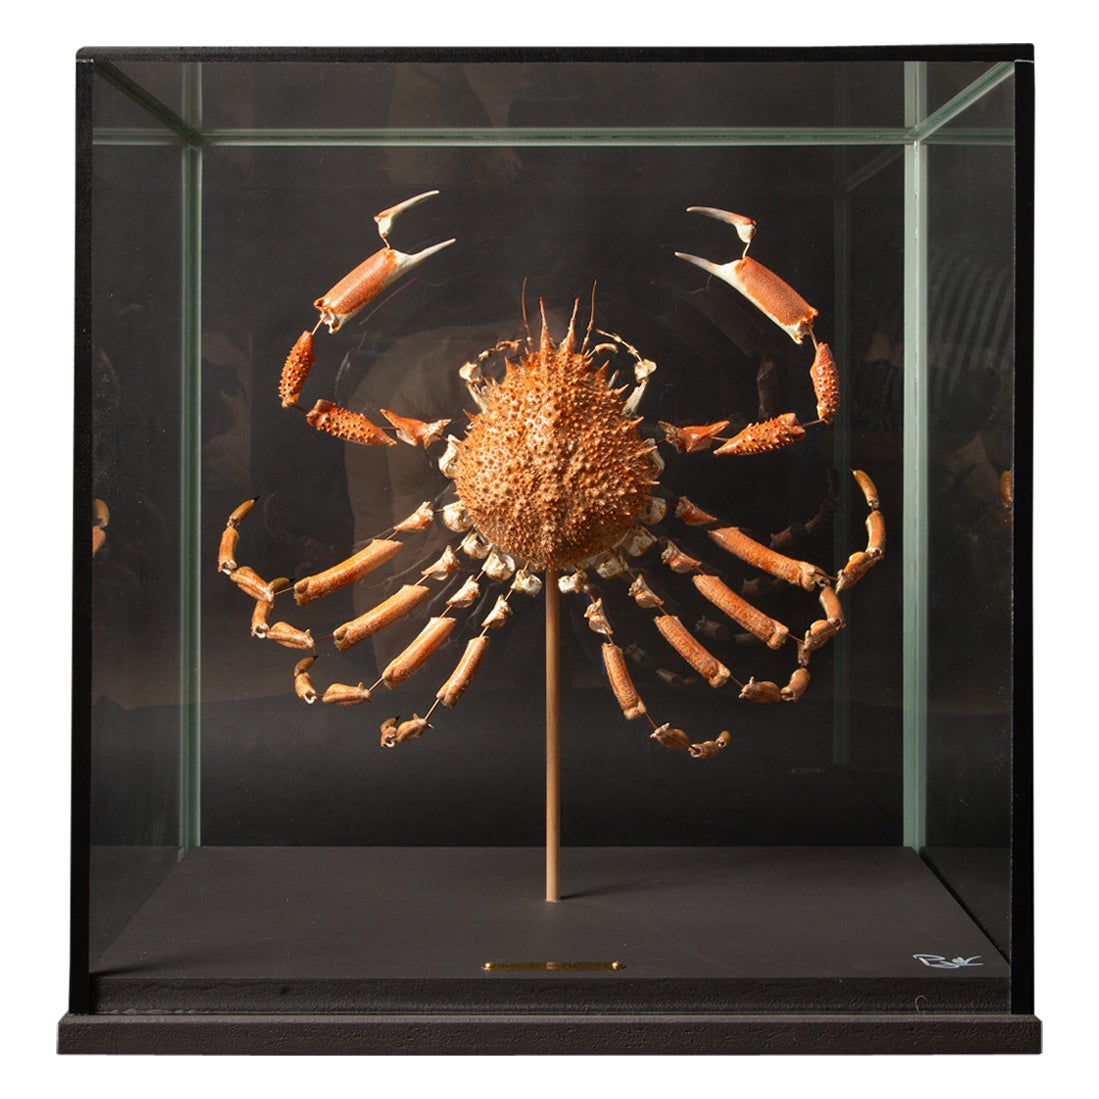 Deconstructed Spiny Spider Crab (Maja Brachydactyla) Specimen Under Glass Case